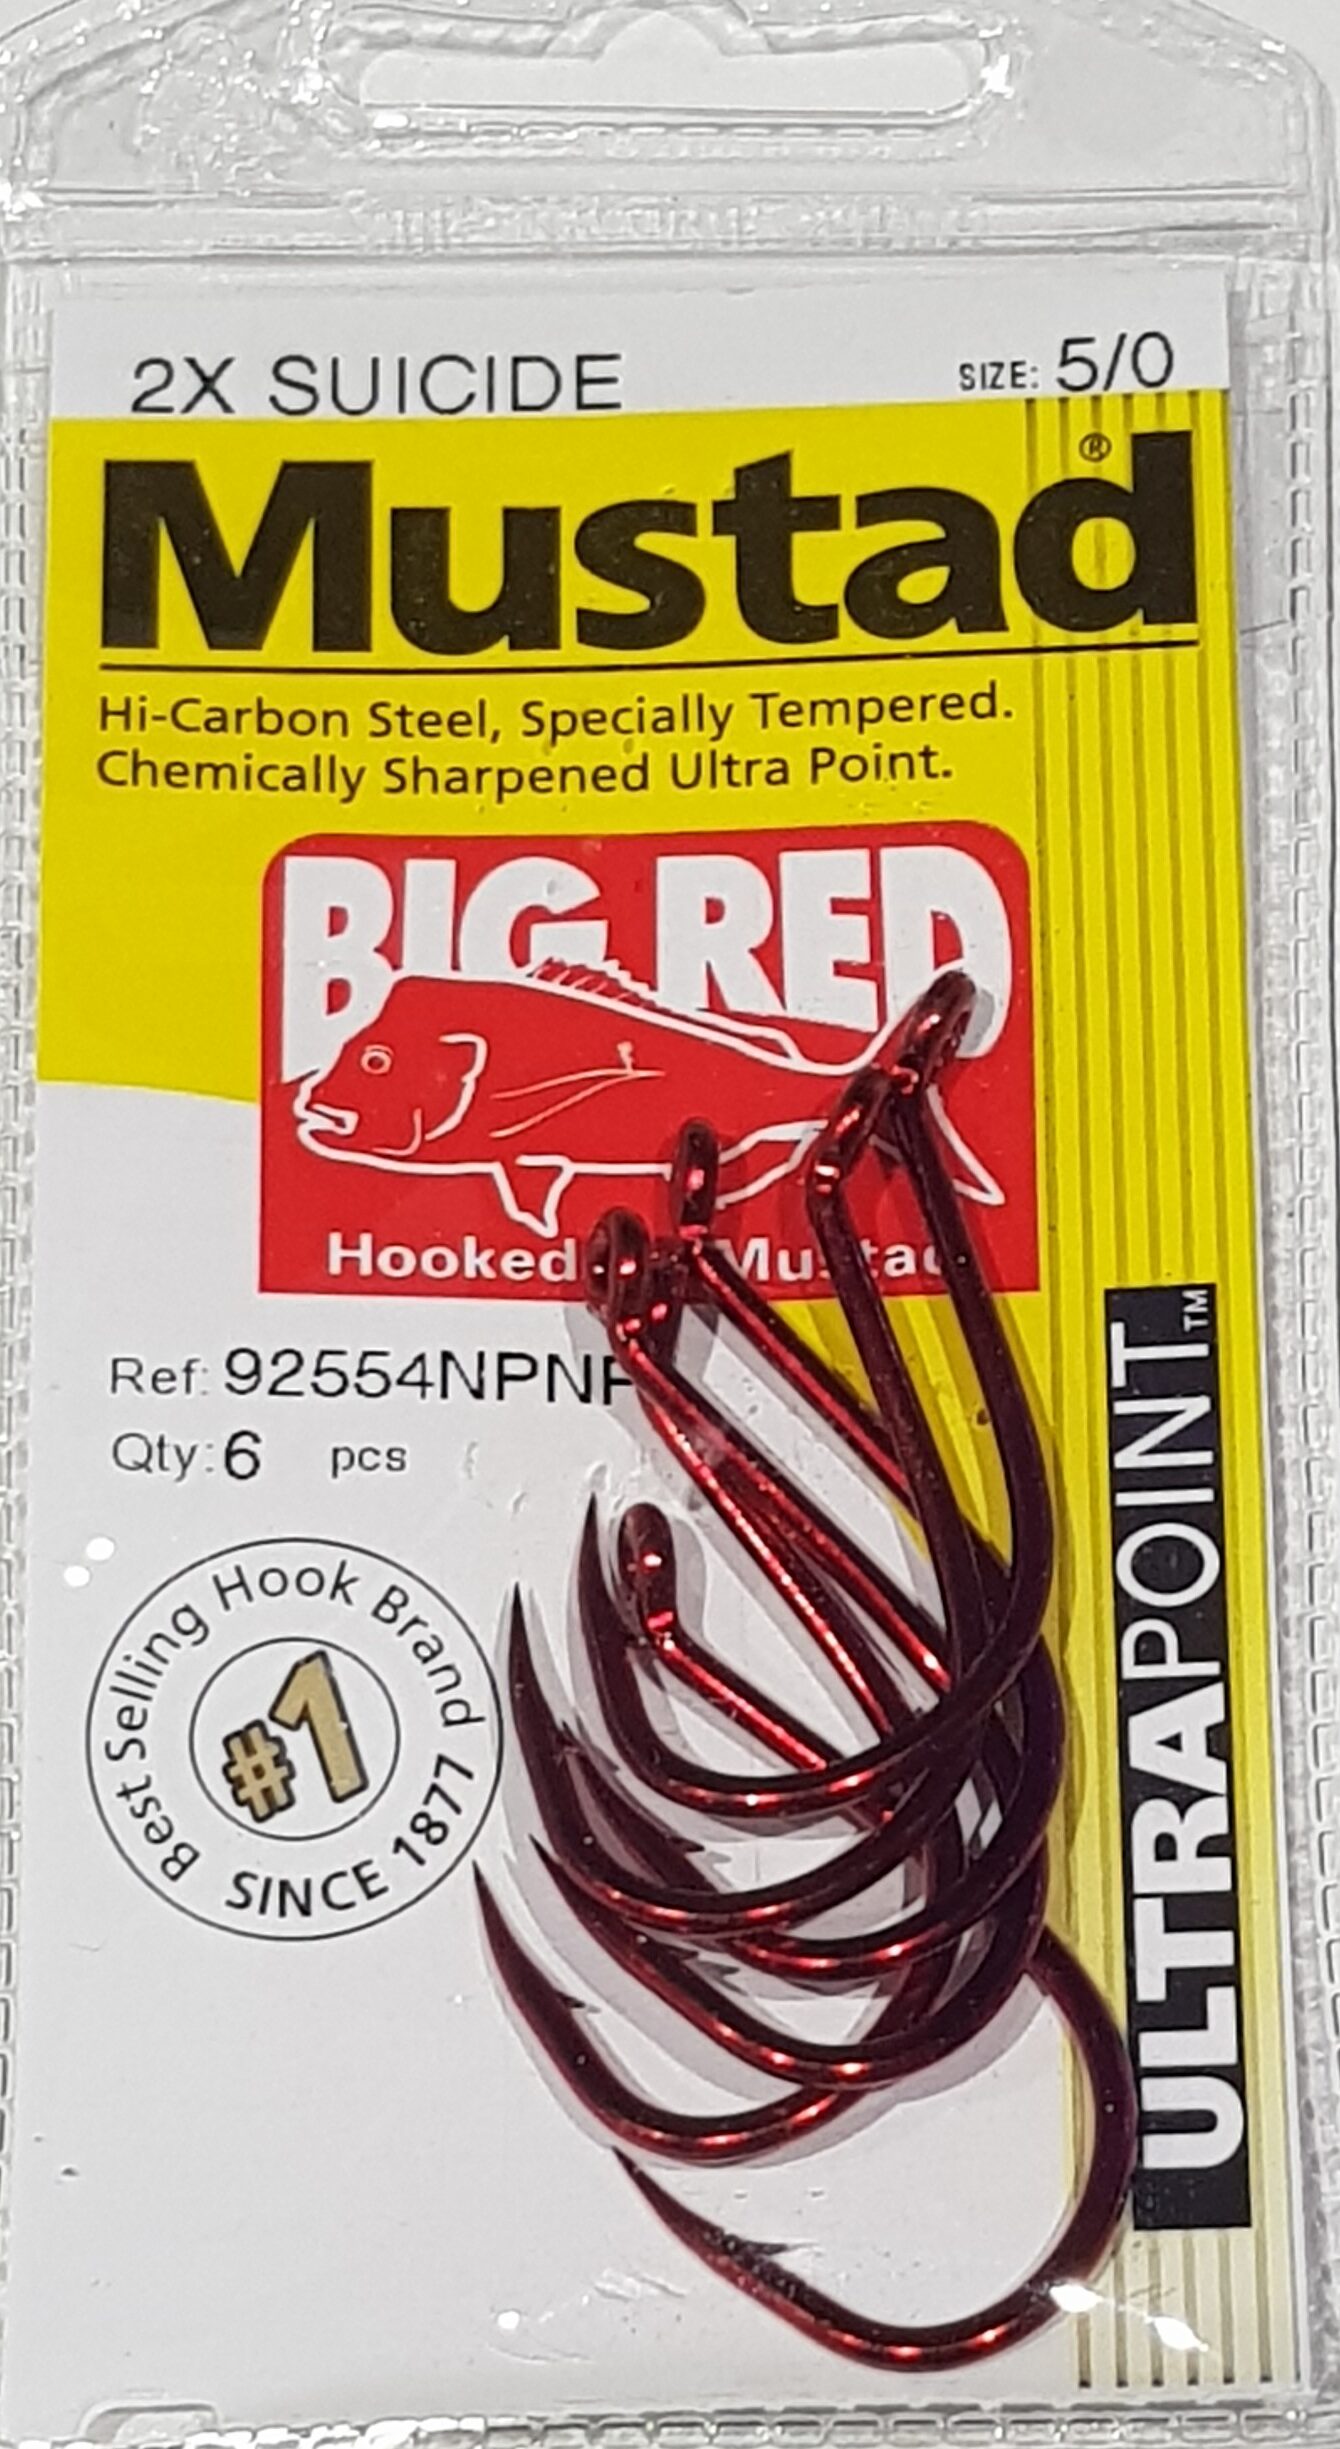 Mustad Big Red Suicide Fishing Hooks 5/0 – Online Fishen Supplies